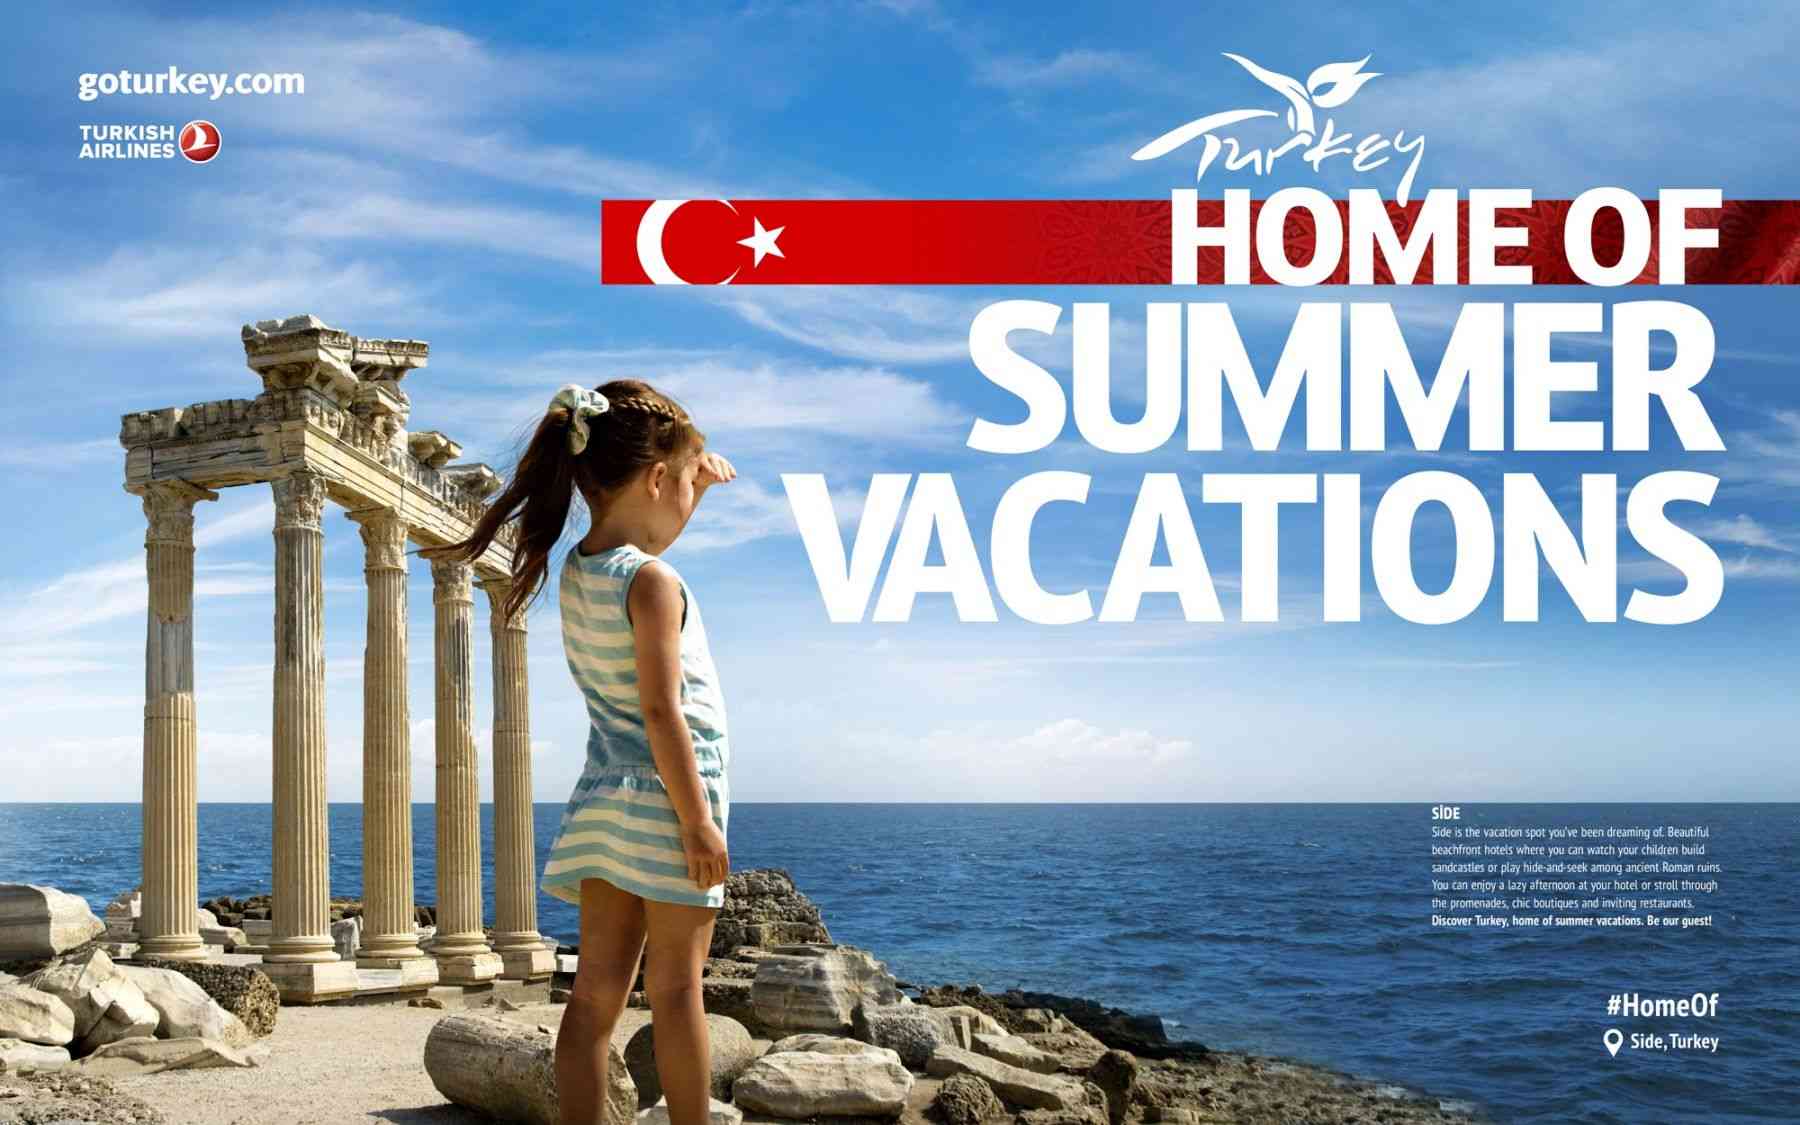 Стамбул, Манавгат и пляж Изтузу в списке Best of the Best